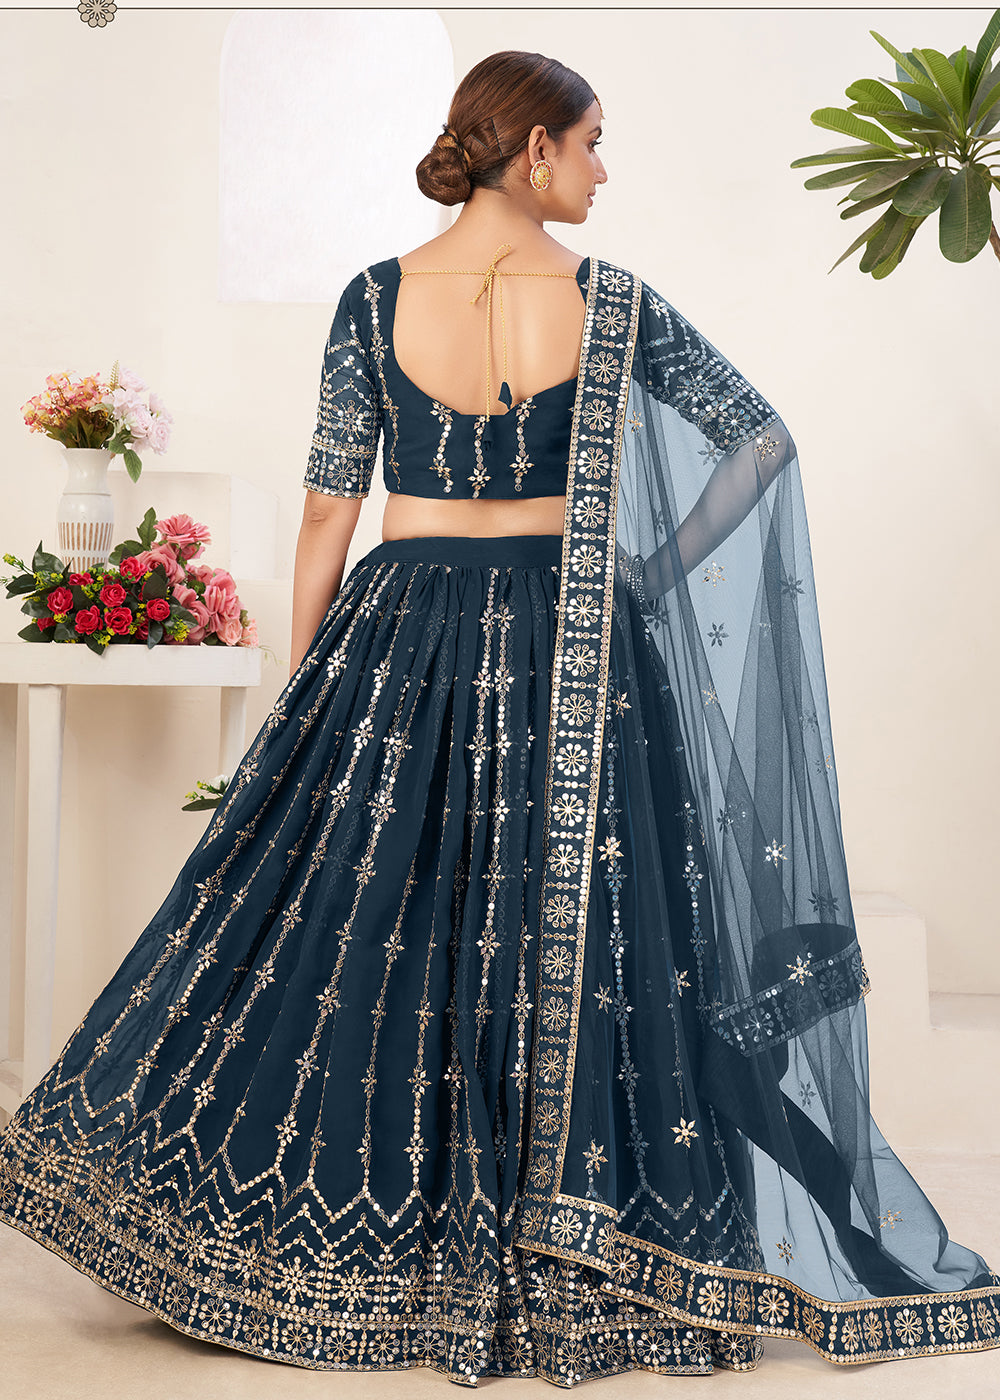 Buy Now Loyal Blue Bordered Sequins Sangeet Wear Lehenga Choli Online in USA, UK, Canada & Worldwide at Empress Clothing.